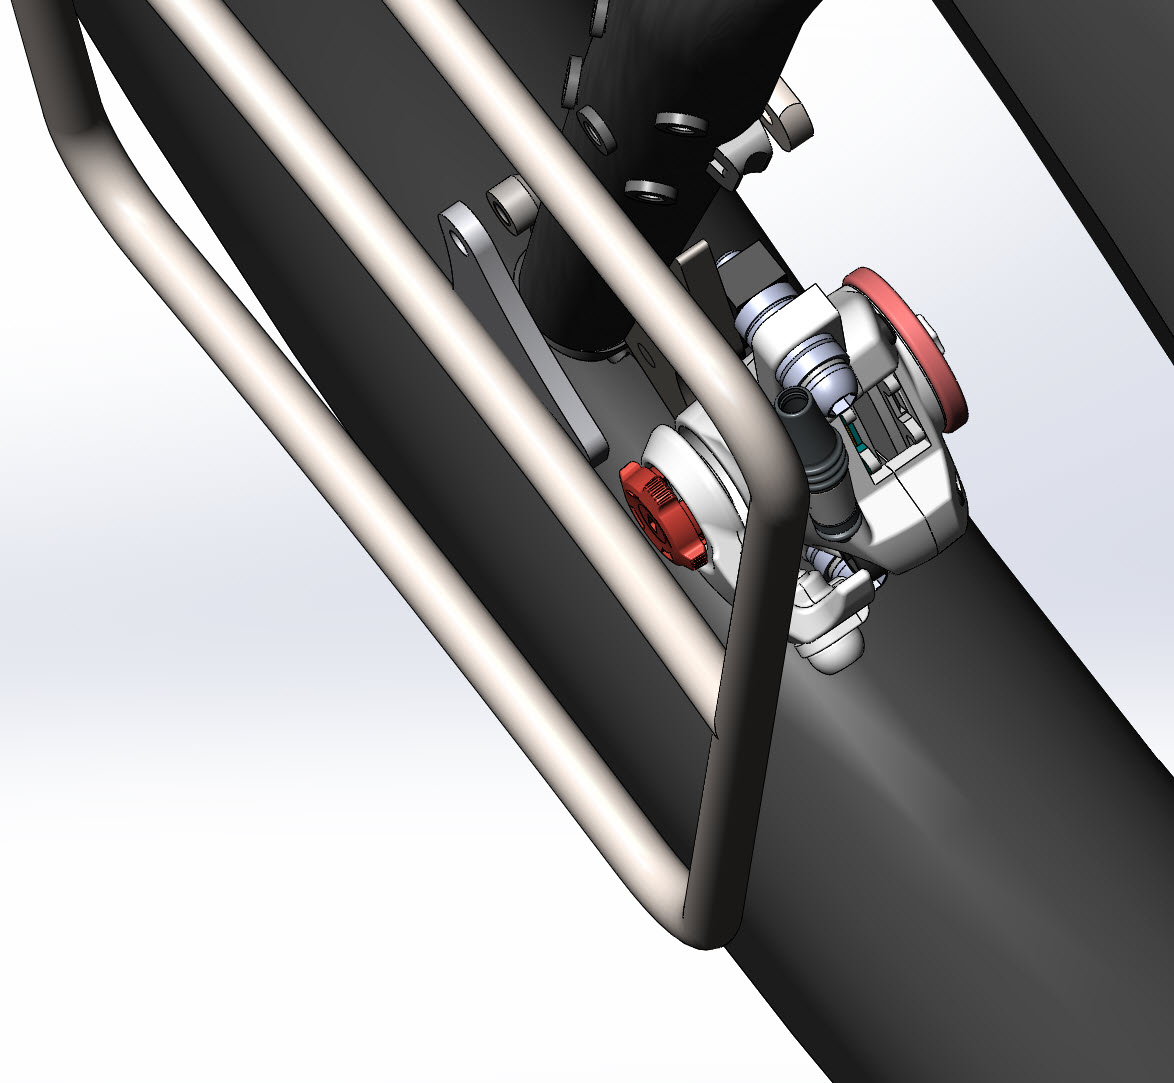 CAD Illustration - Salsa Down Under HD rack - barrel boss mount detail - close up view